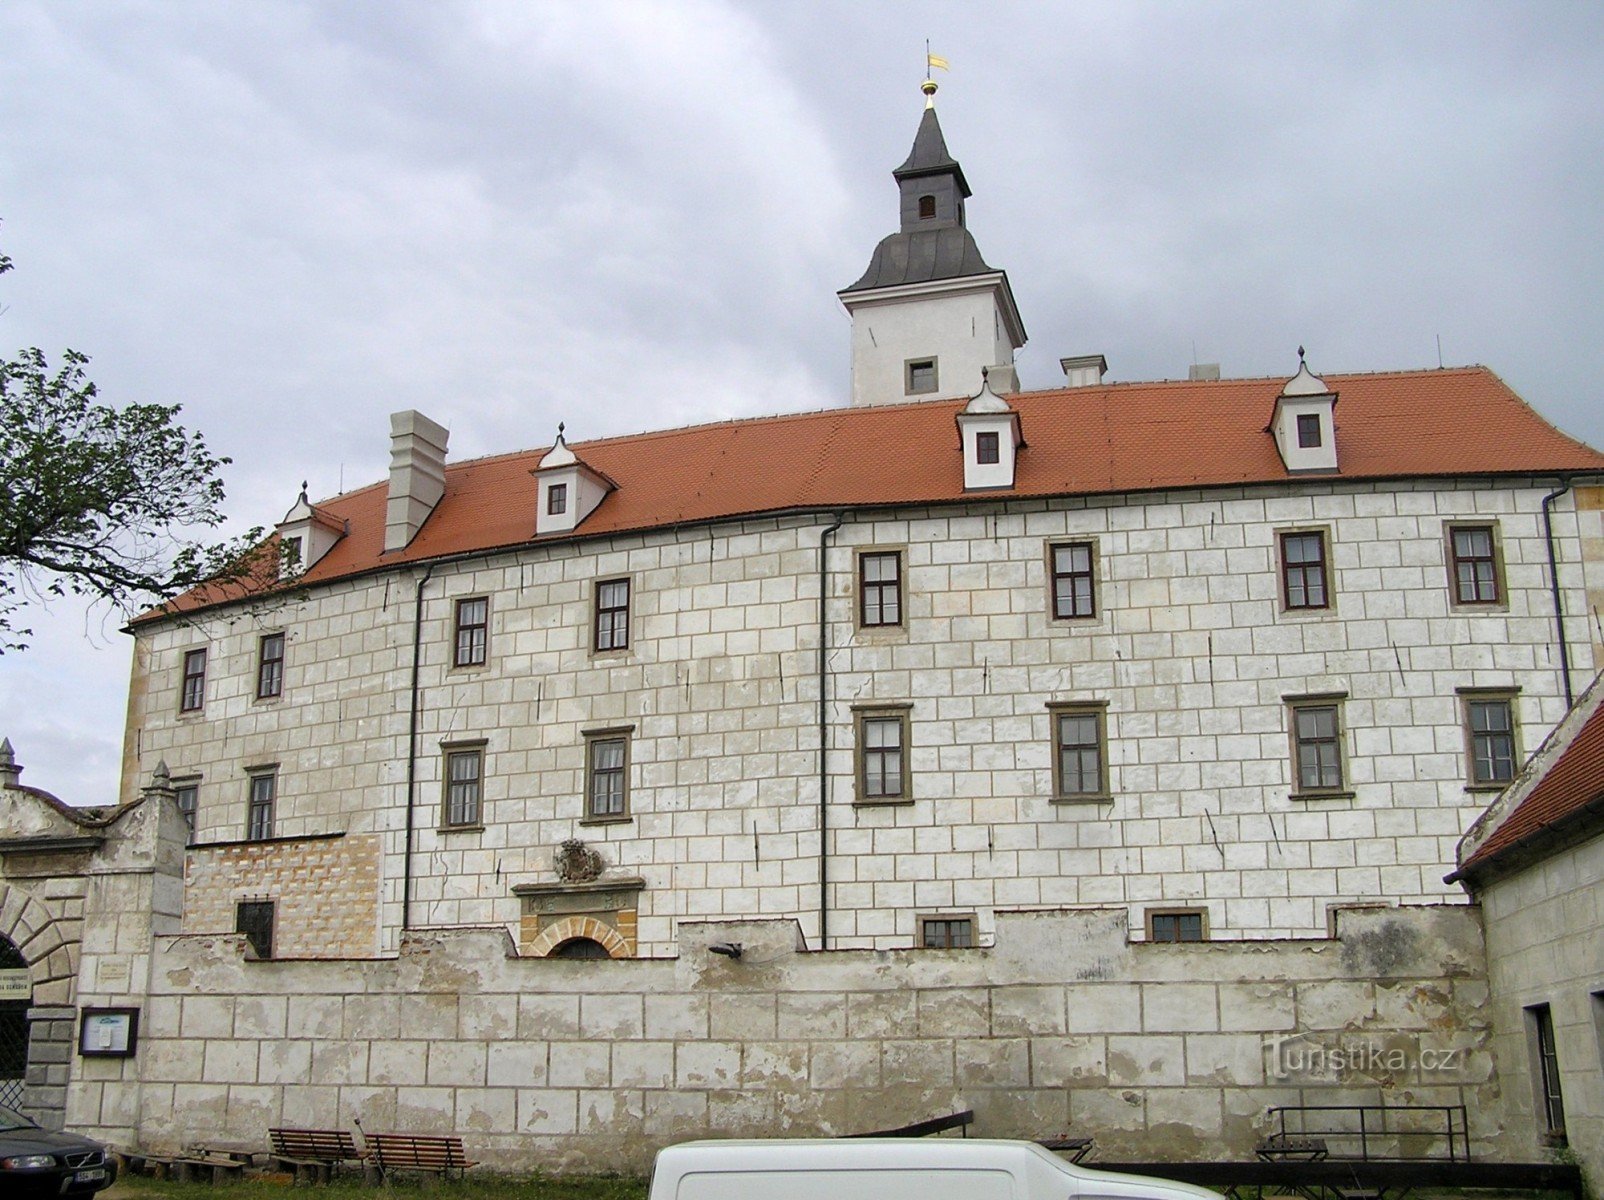 Jevišoice - Stary Zamek (sierpień 2006)